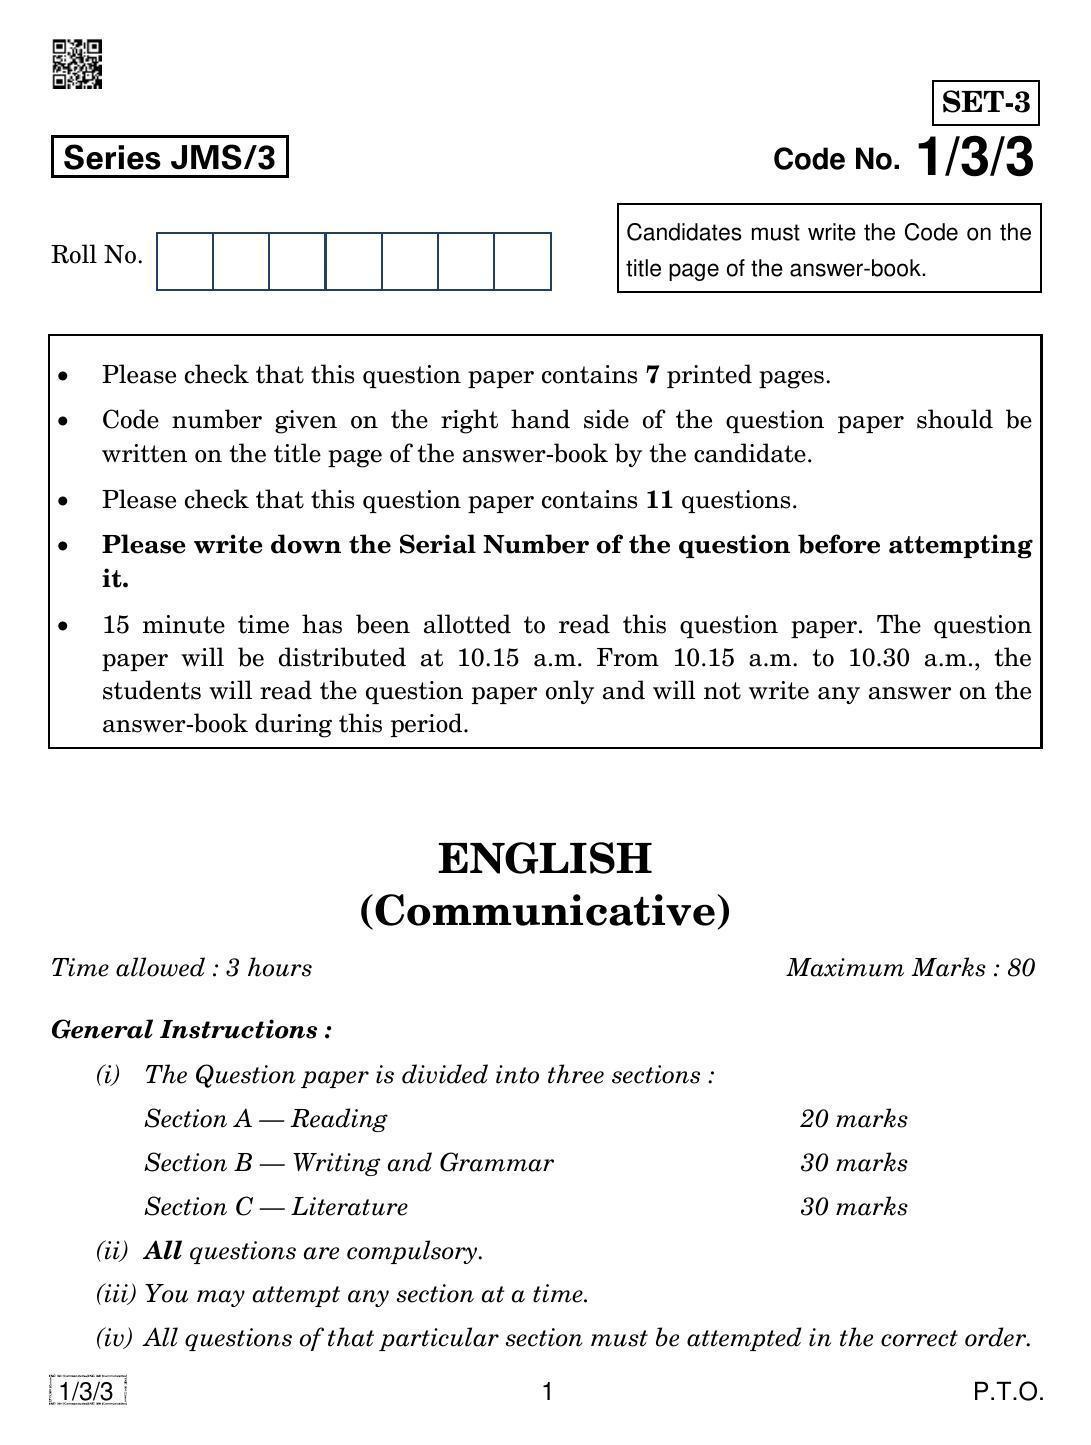 CBSE Class 10 1-3-3 ENGLISH COMMUNICATIVE 2019 Question Paper - Page 1